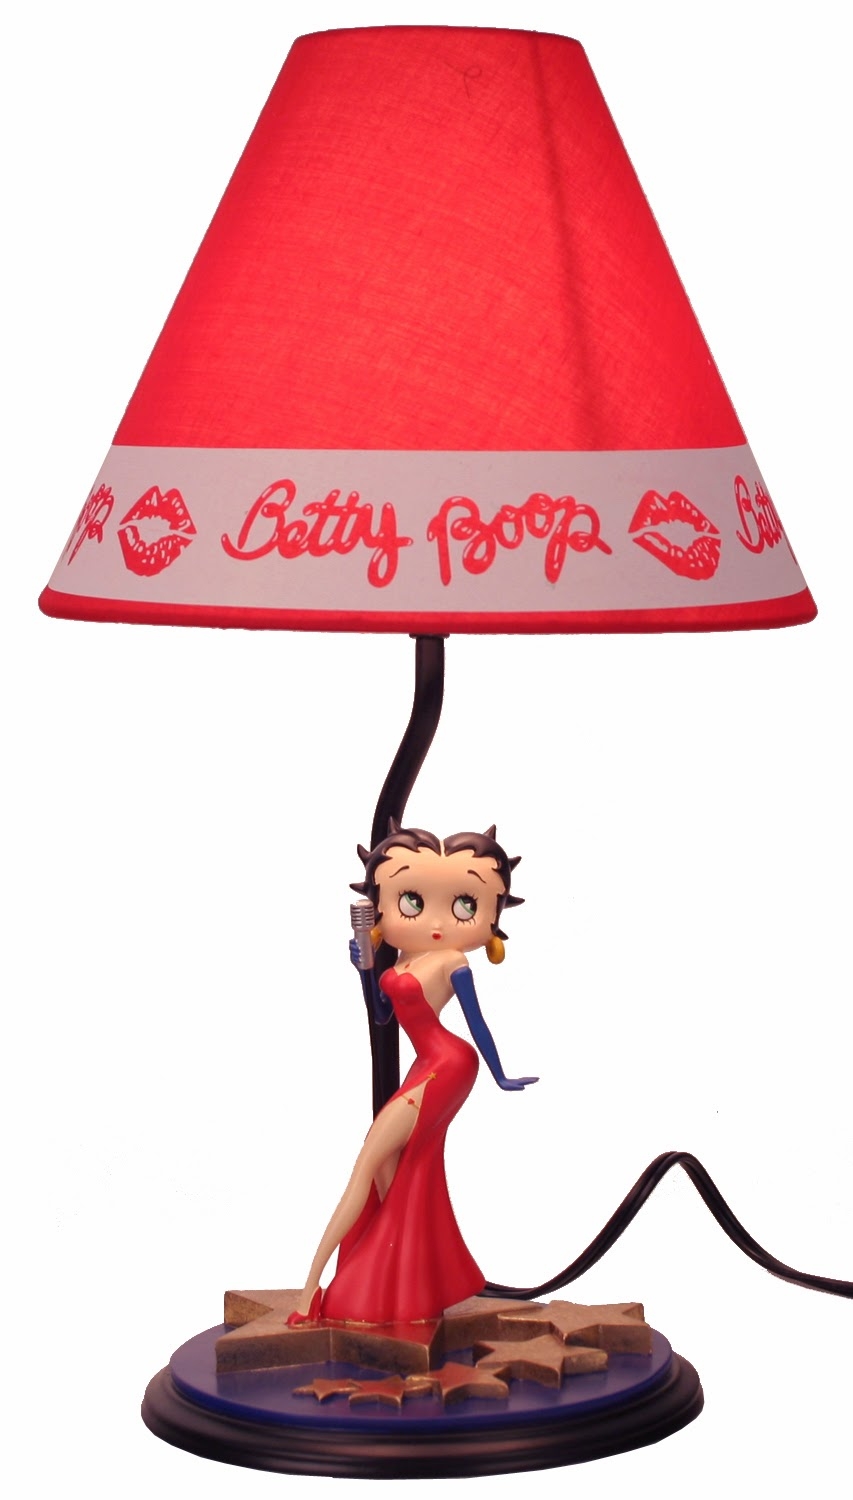 Betty boop lamp 29